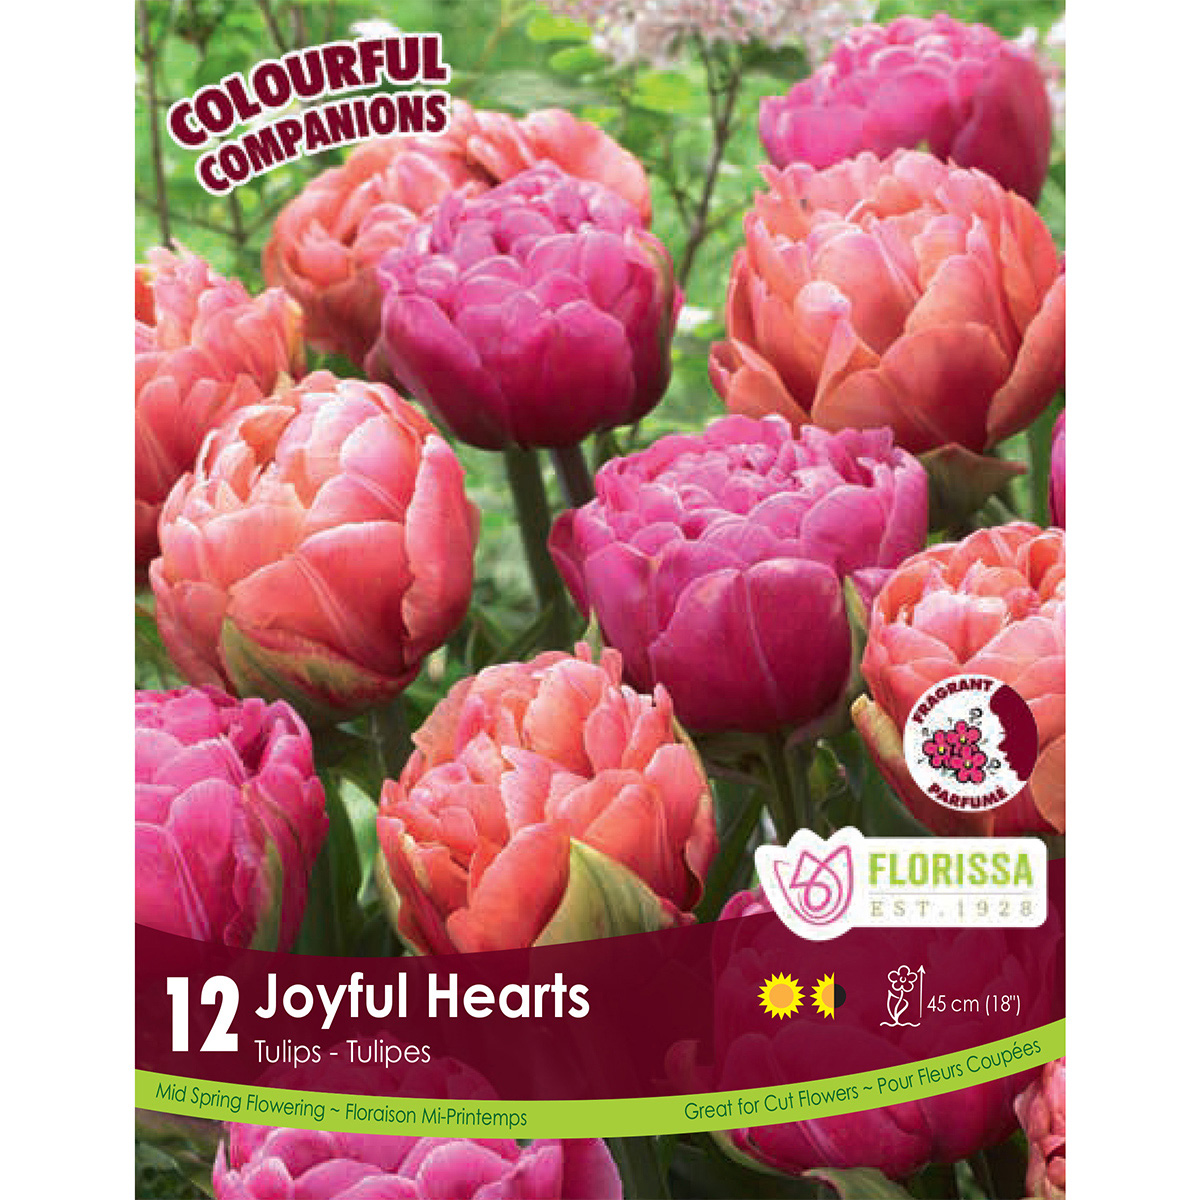 Colourful Companions Tulipa 'Joyful Dreams' Bulbs 12PK 